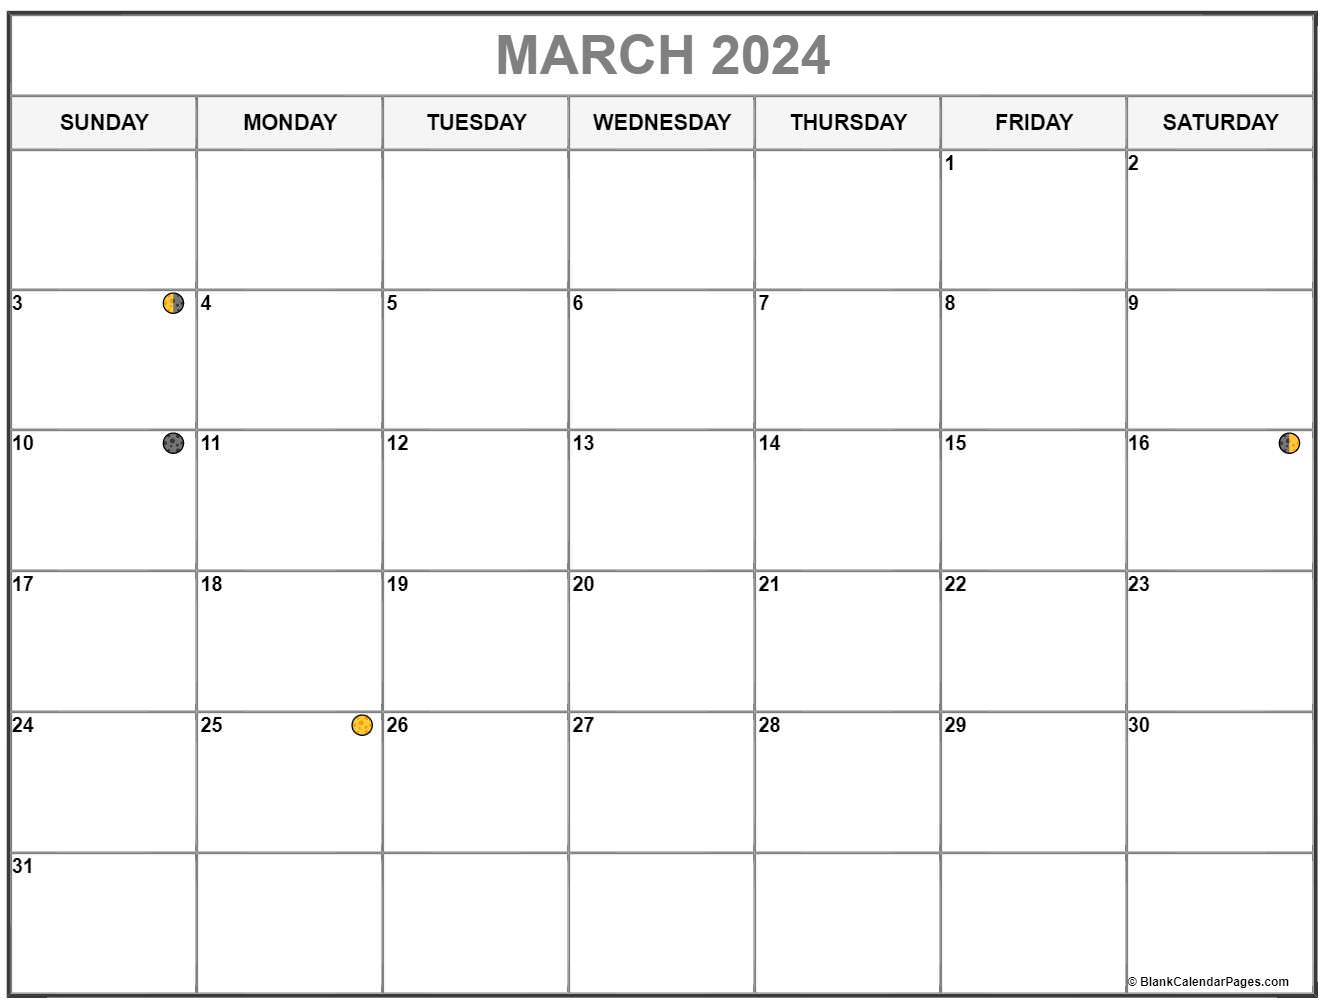 March 2024 Lunar Calendar | Moon Phase Calendar